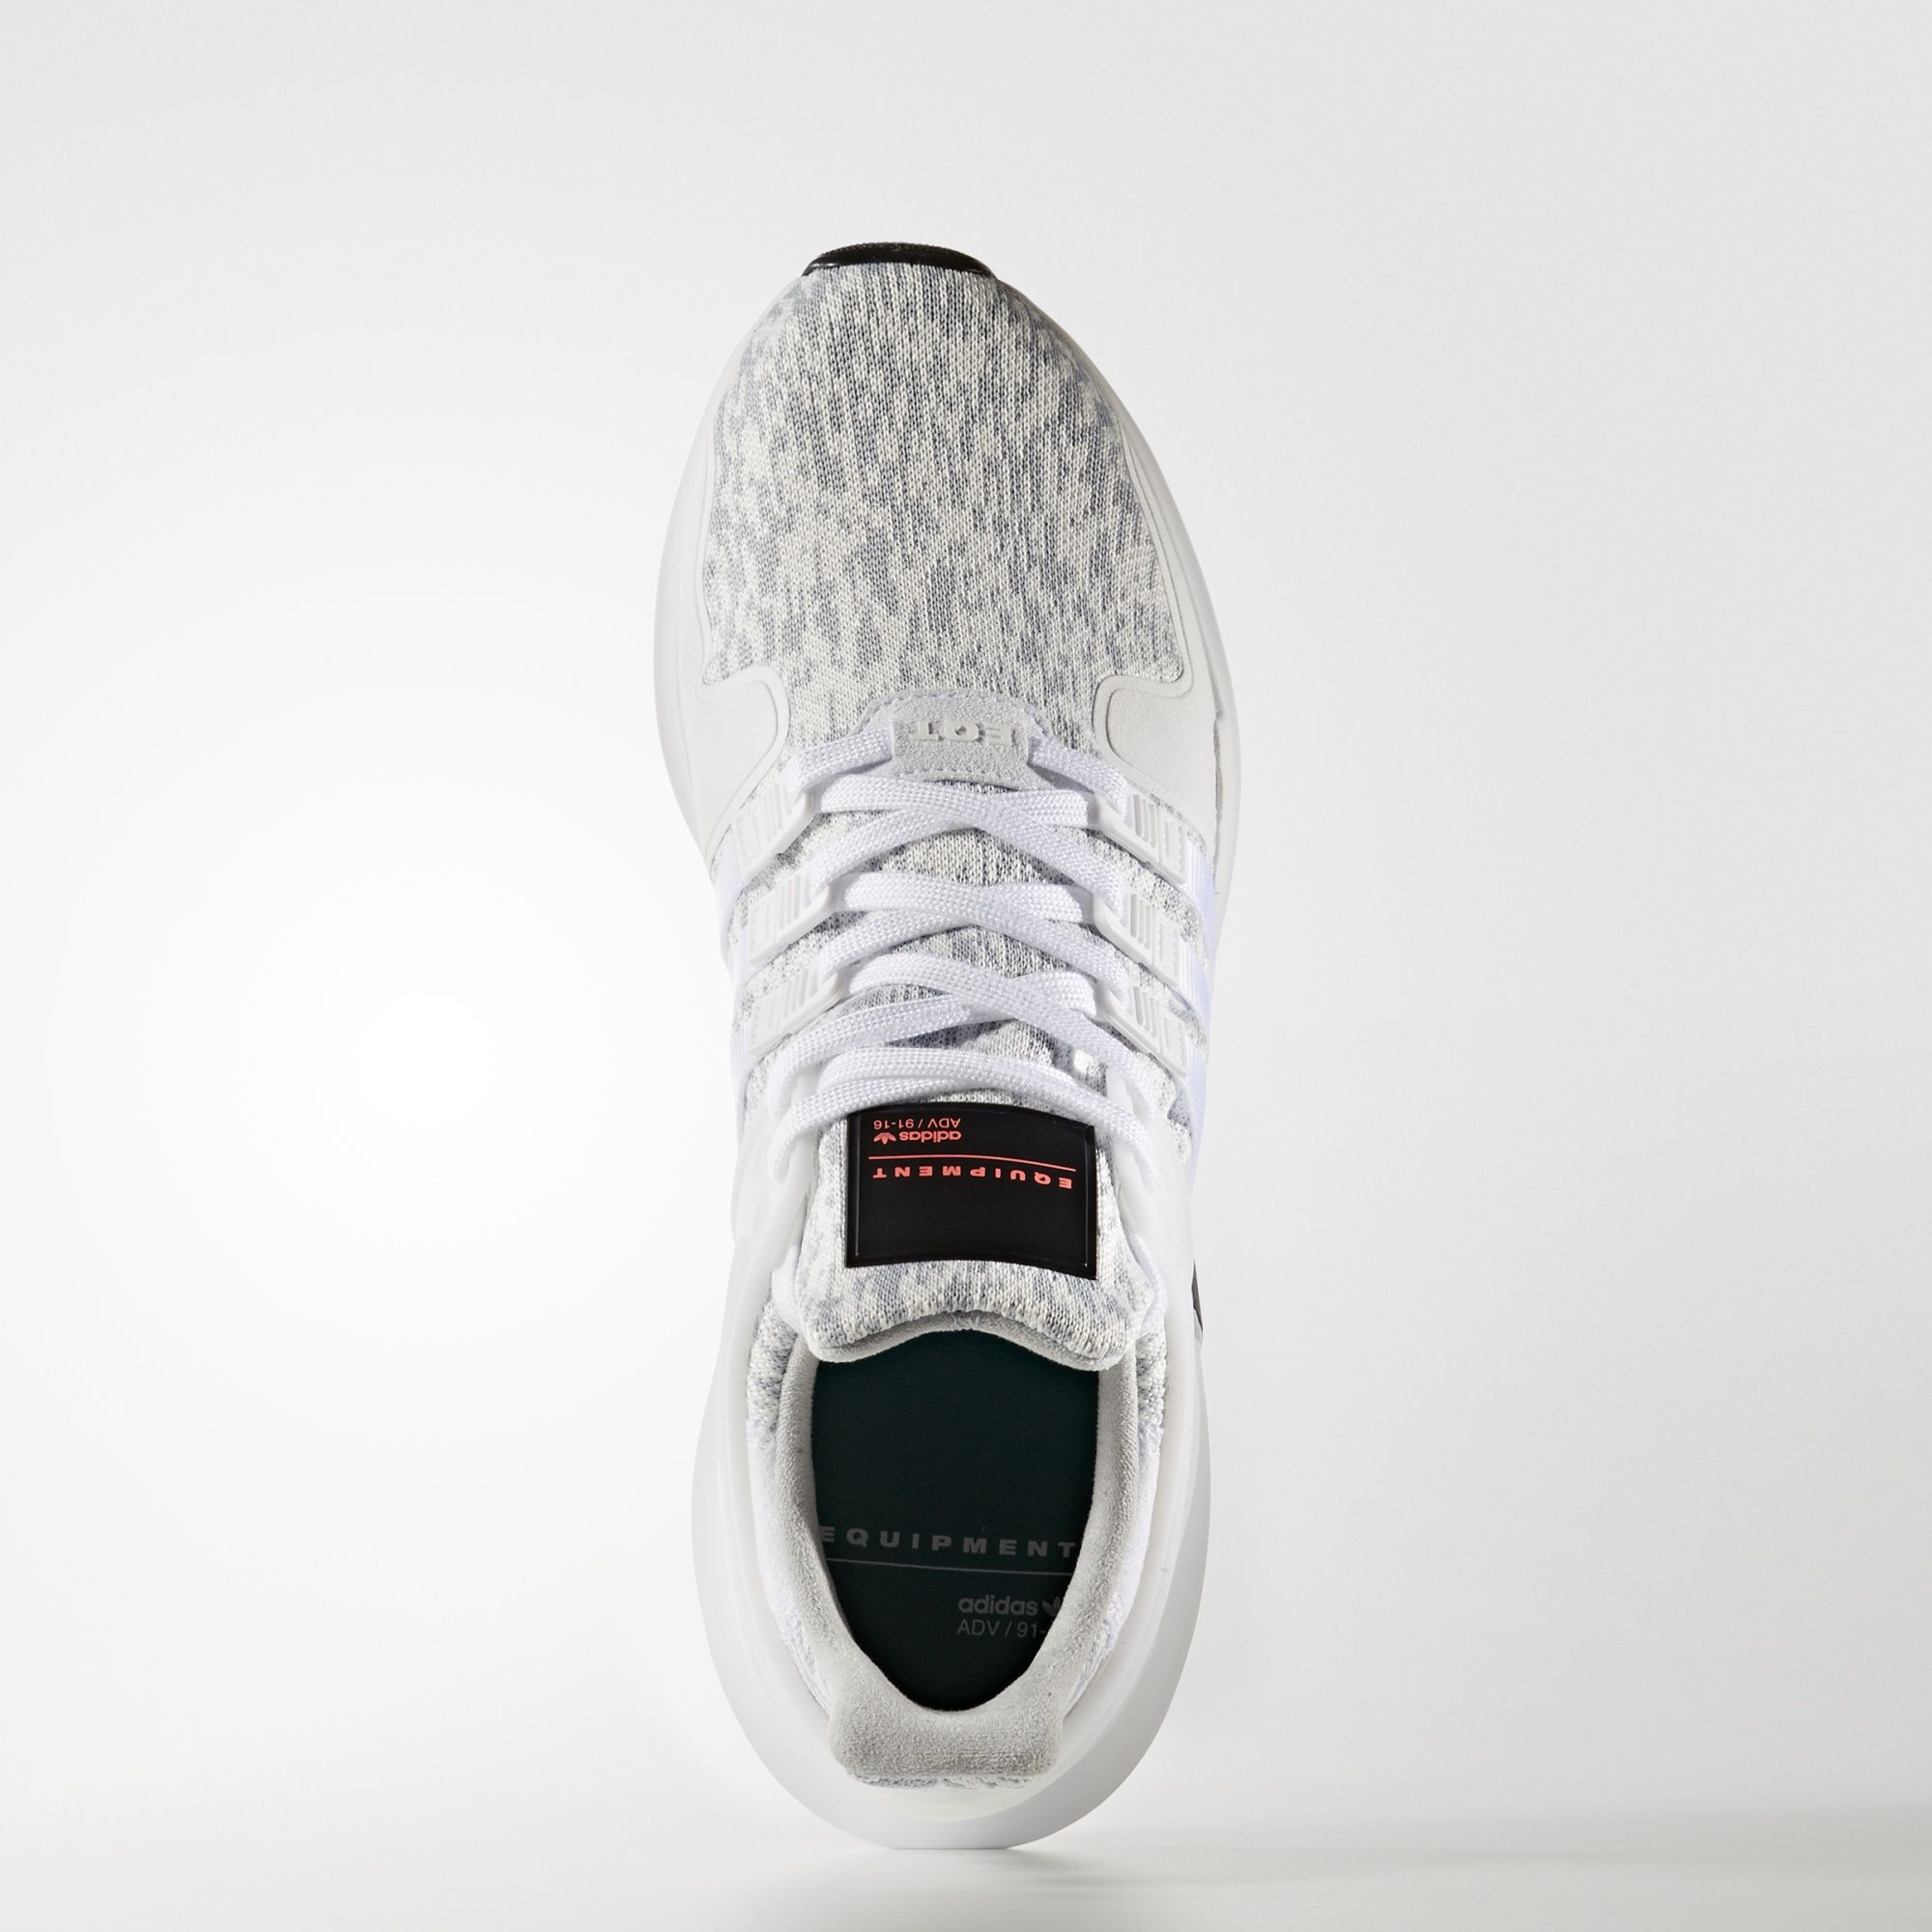 Adidas EQT Support ADV
Clear Onix / Footwear White / Core Black